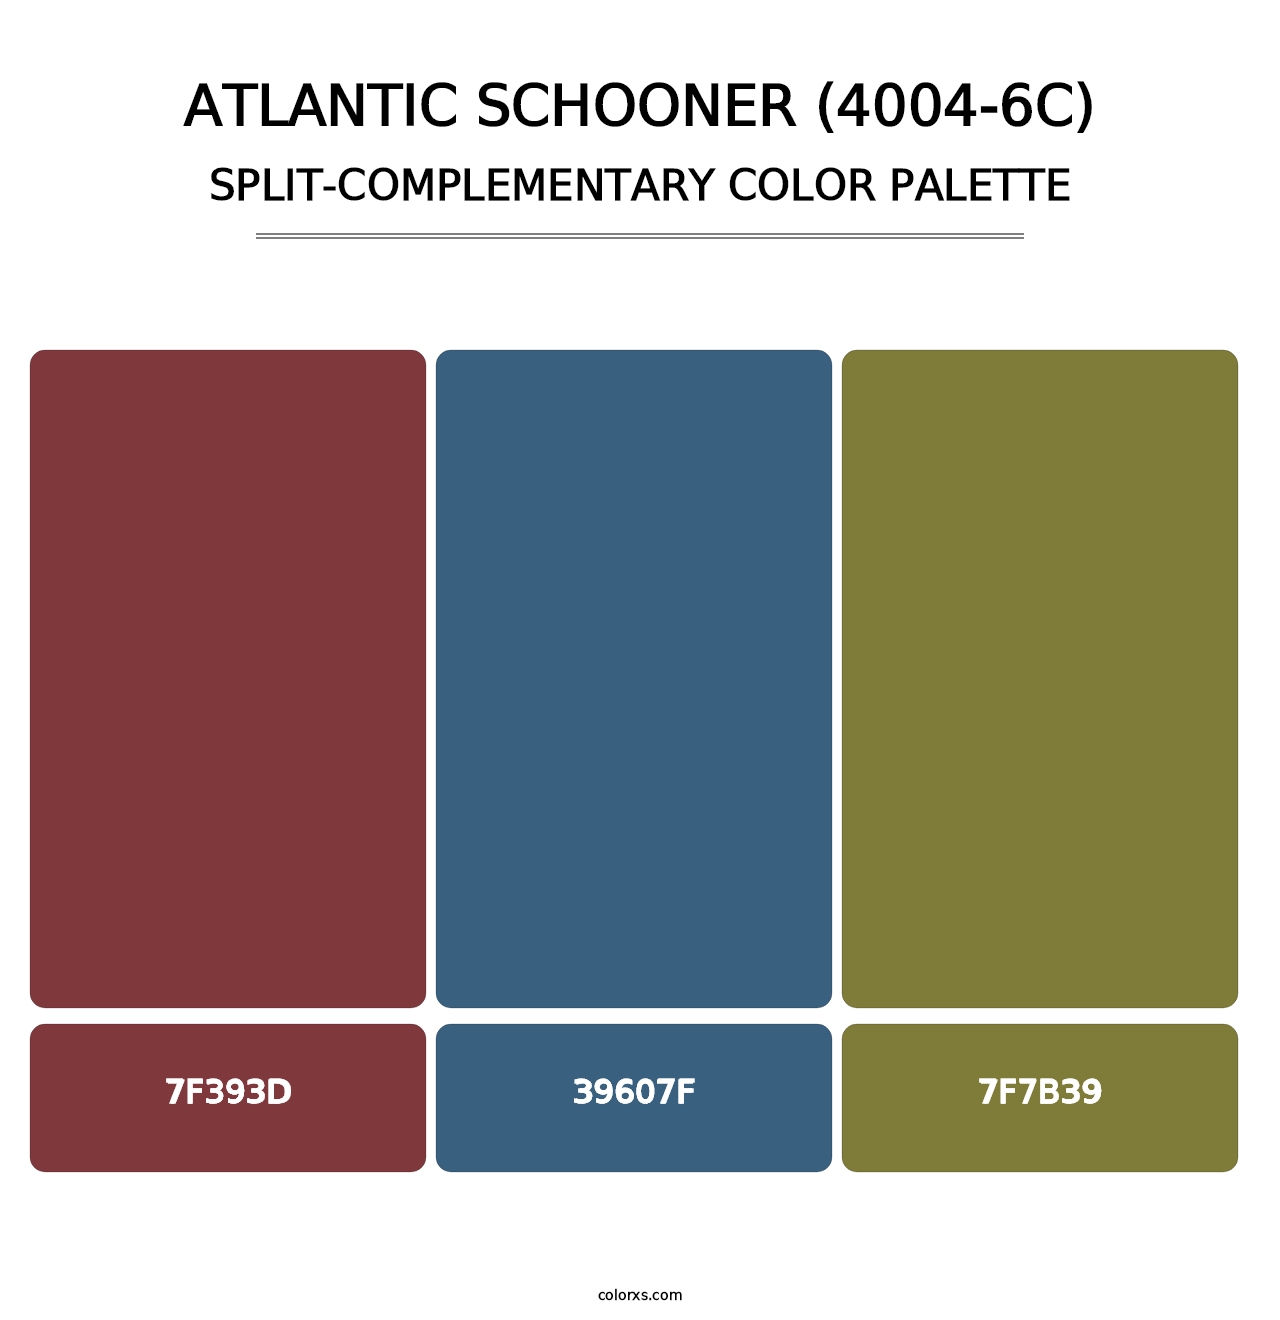 Atlantic Schooner (4004-6C) - Split-Complementary Color Palette